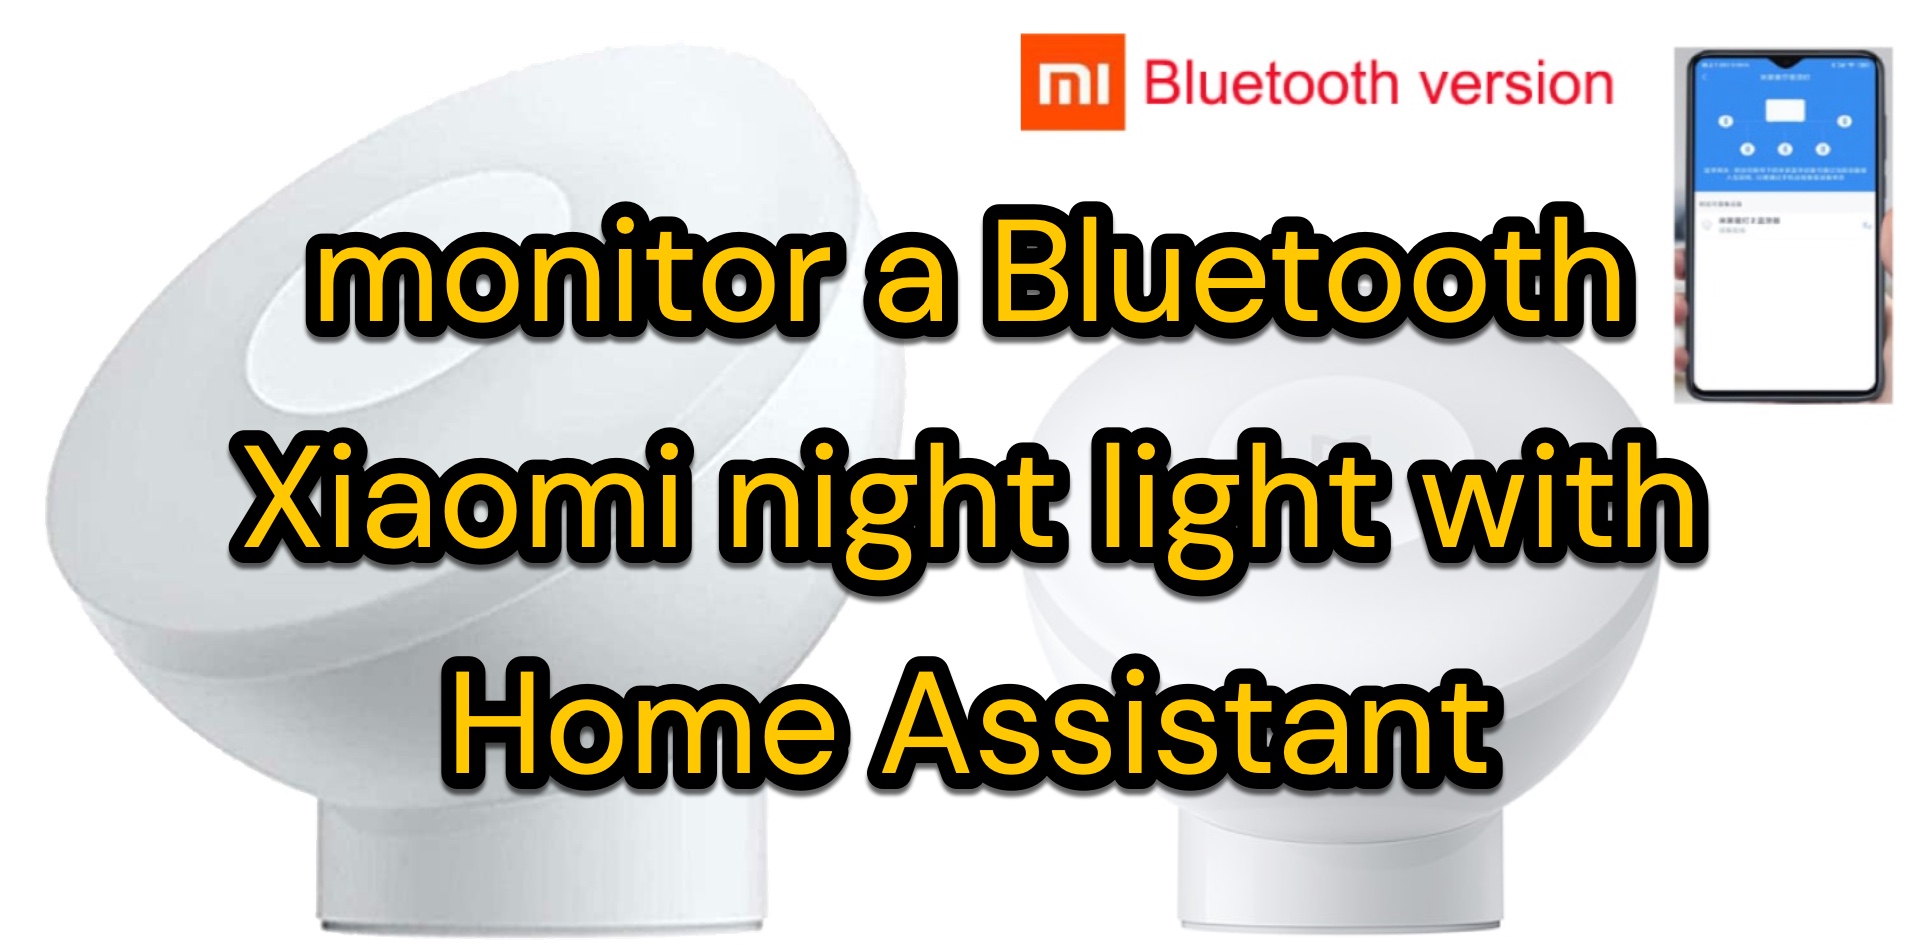 Yeelight Motion Sensor Night Light - Full walkthrough and